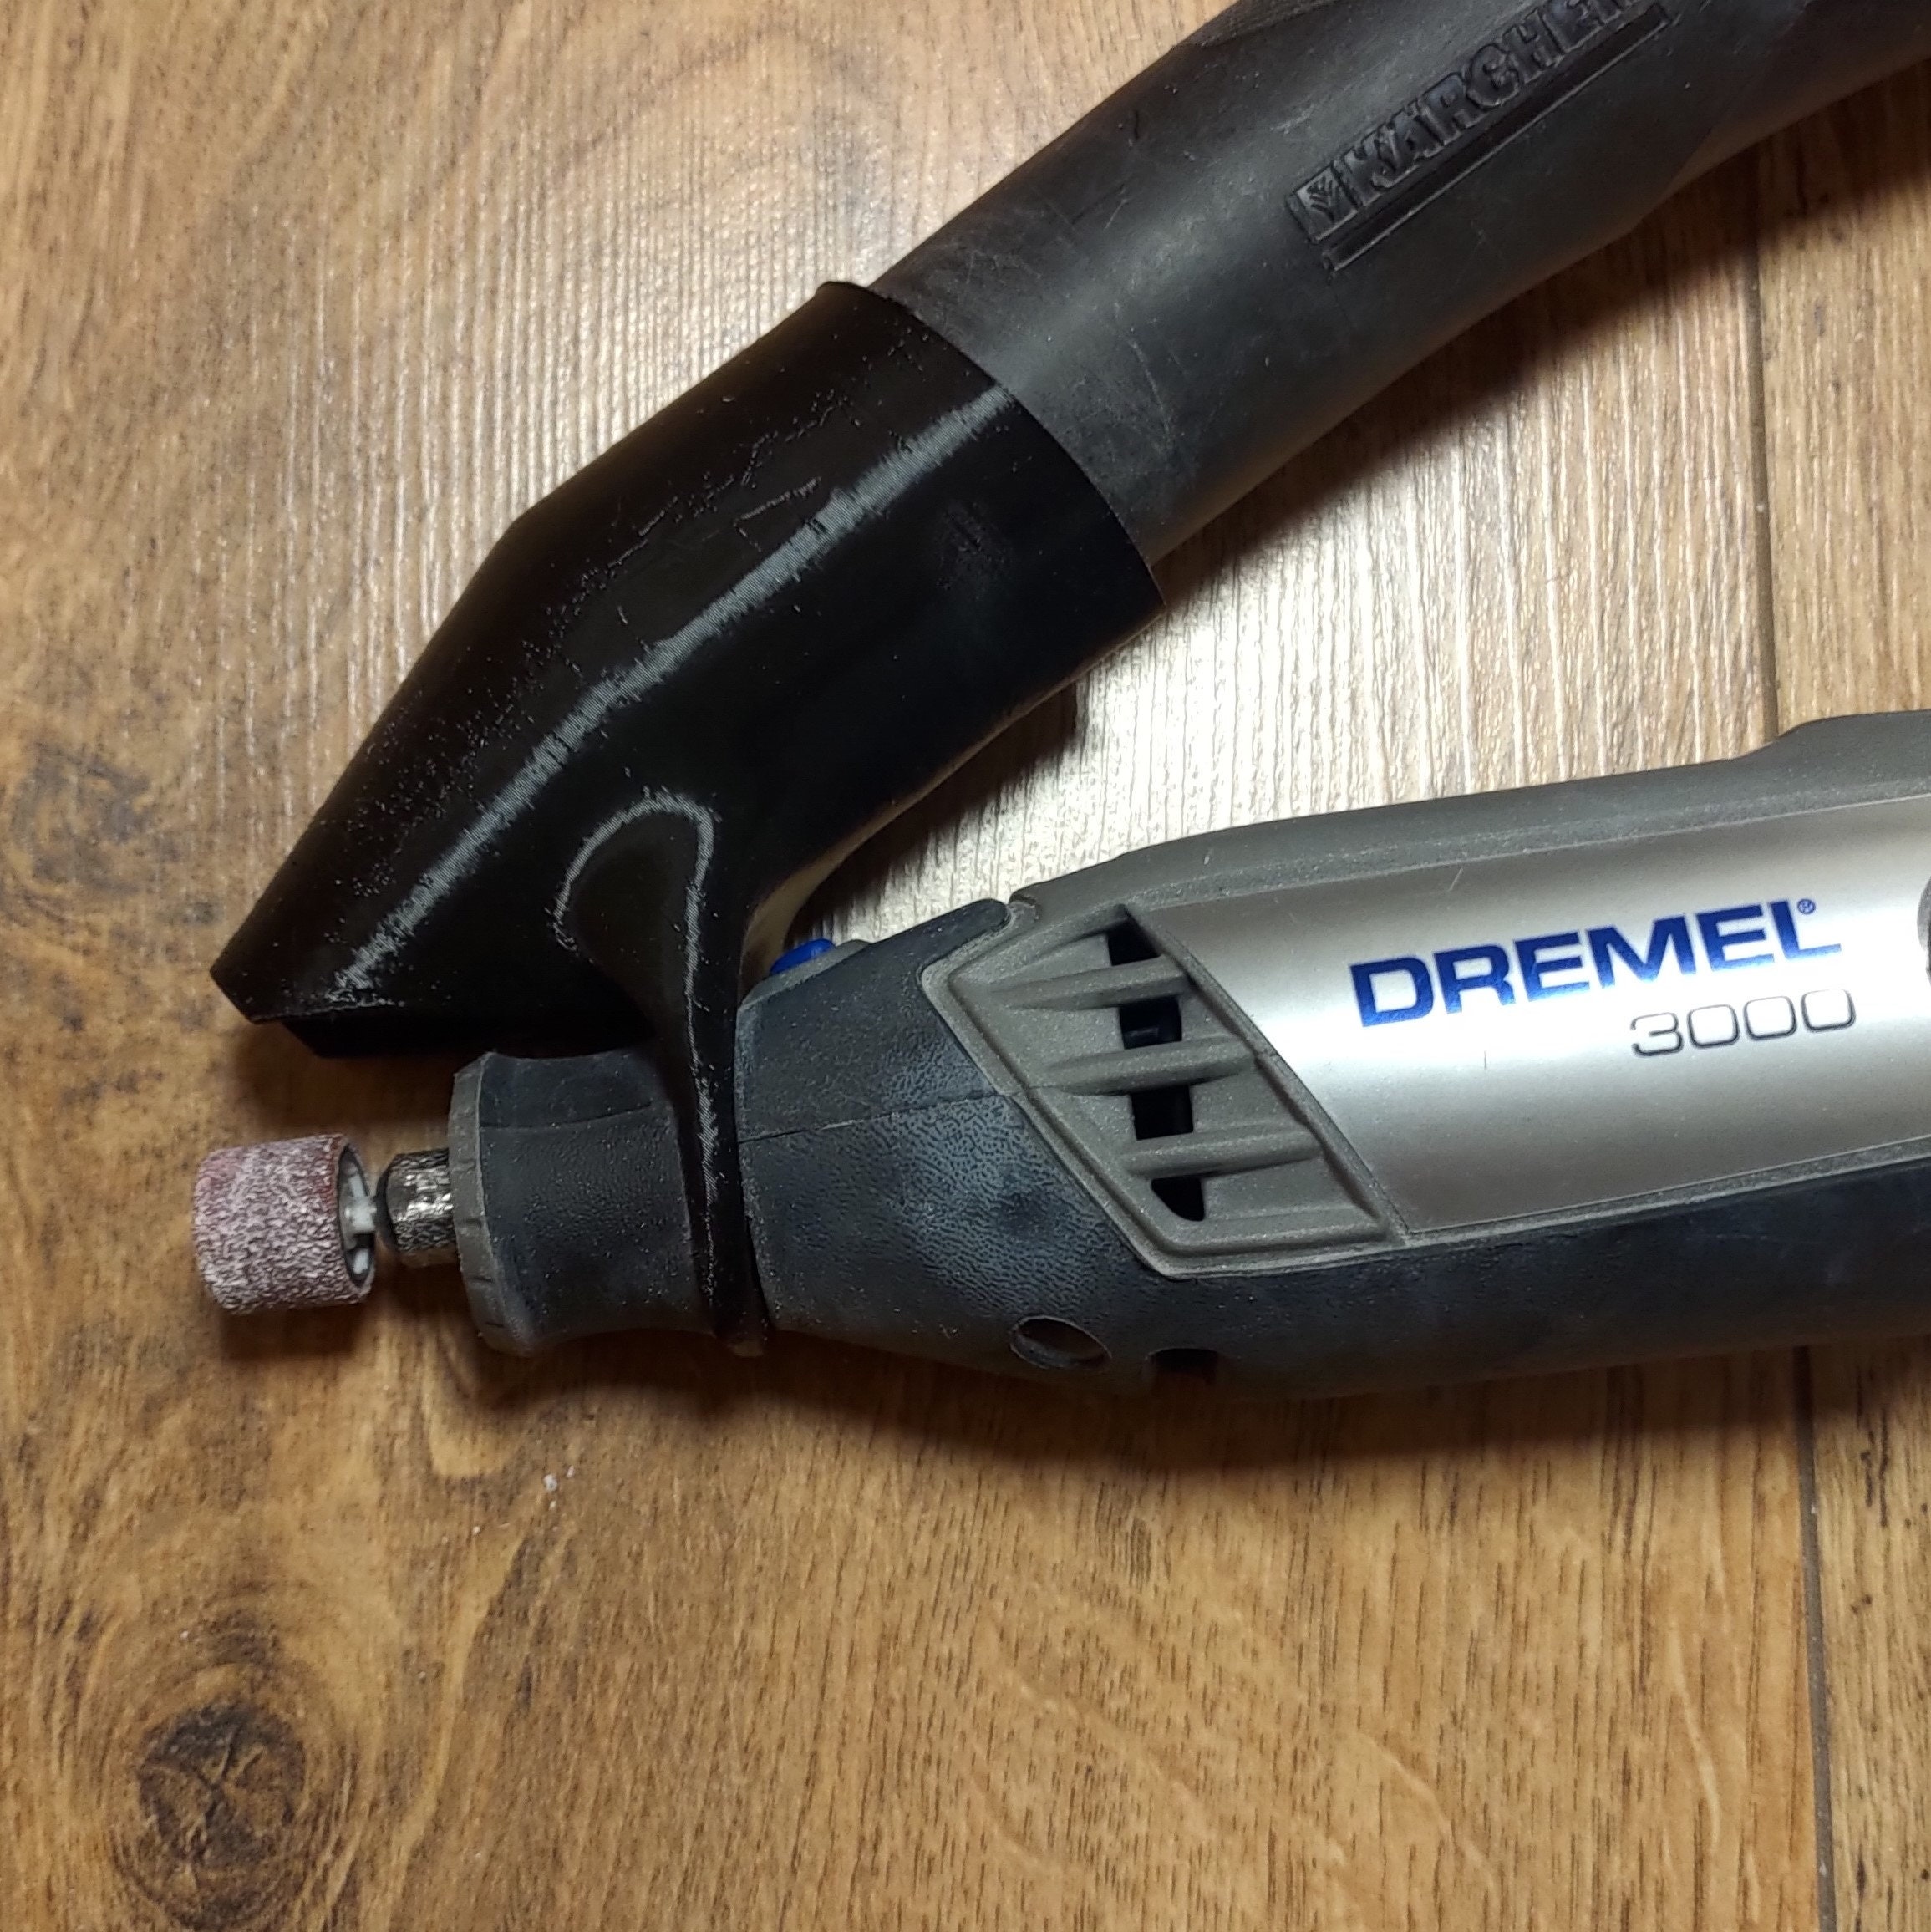 Dremel 3000 / 4000 to Vacuum Hose Adapter Attachment 